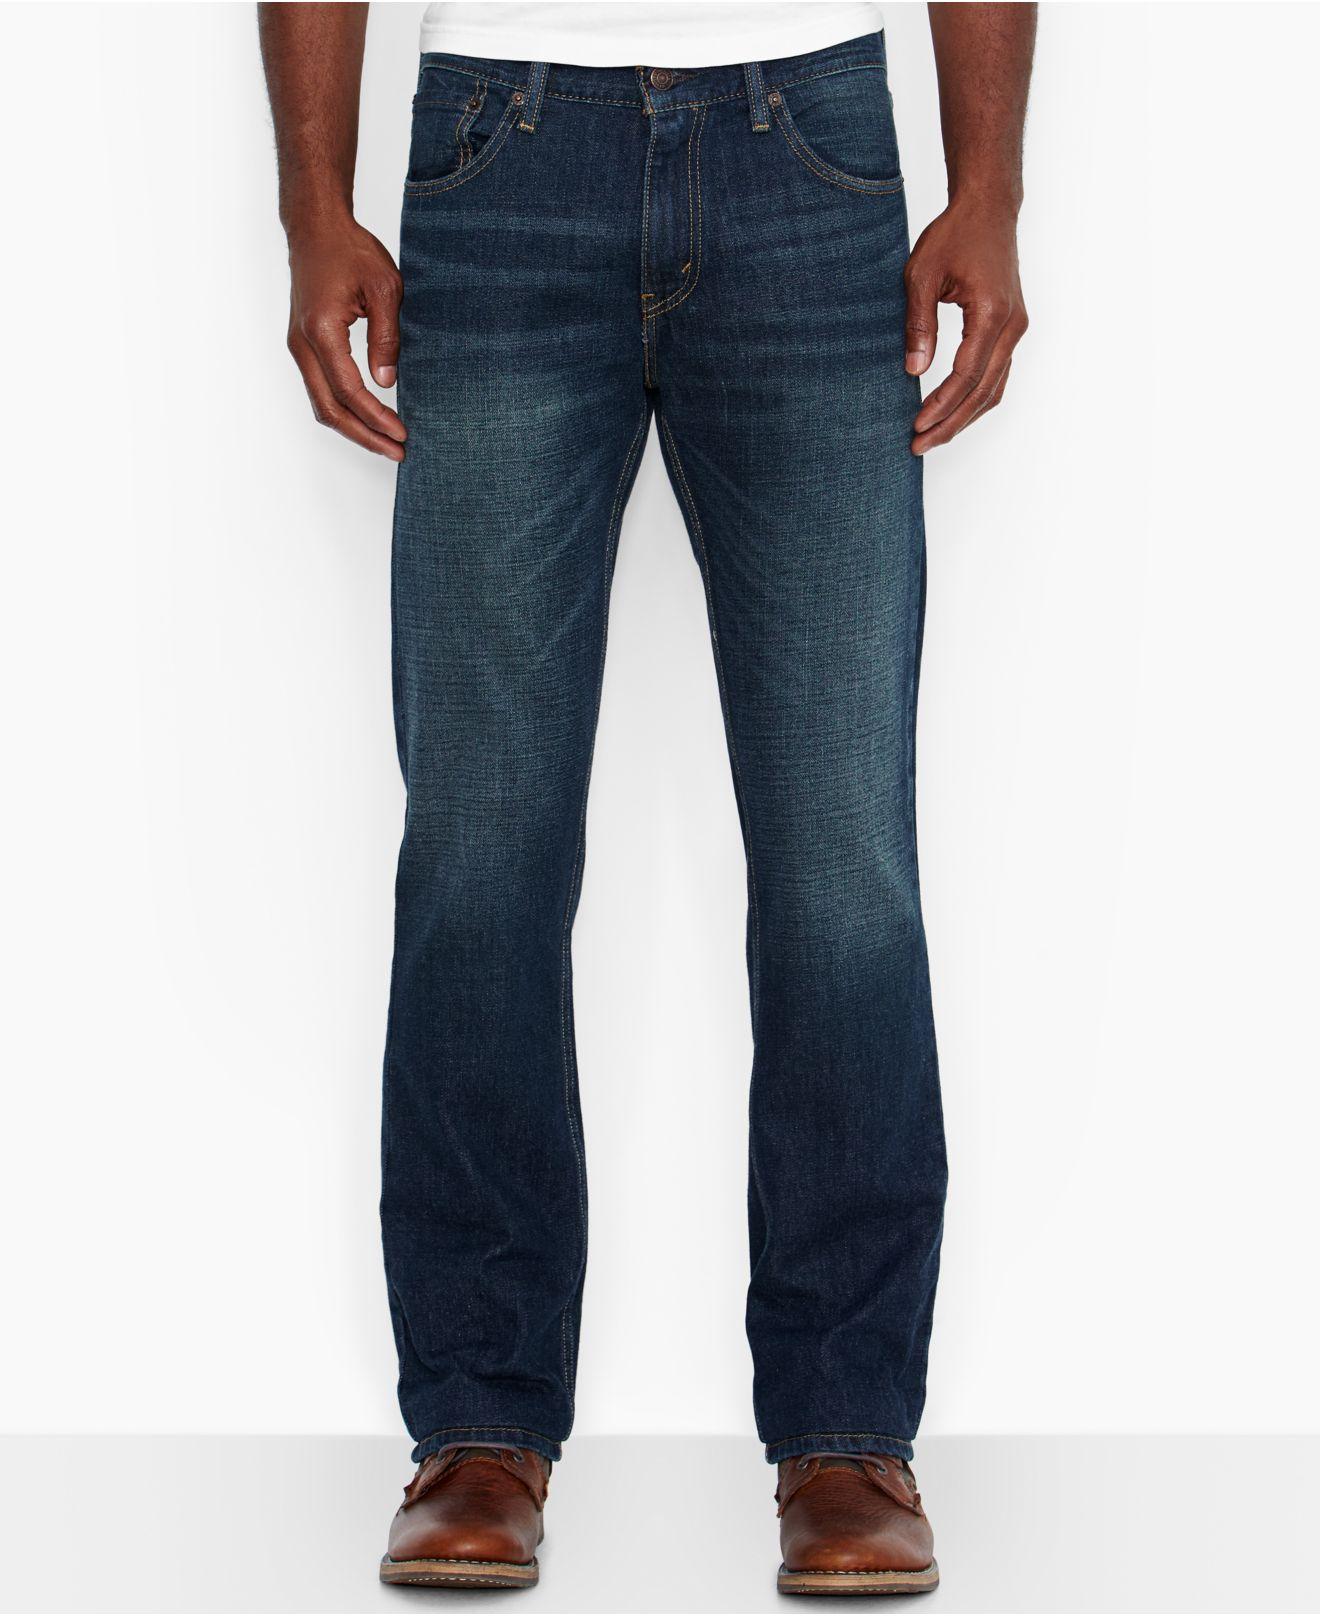 Levi's Denim 527? Slim Bootcut Fit Jeans in Blue for Men - Lyst